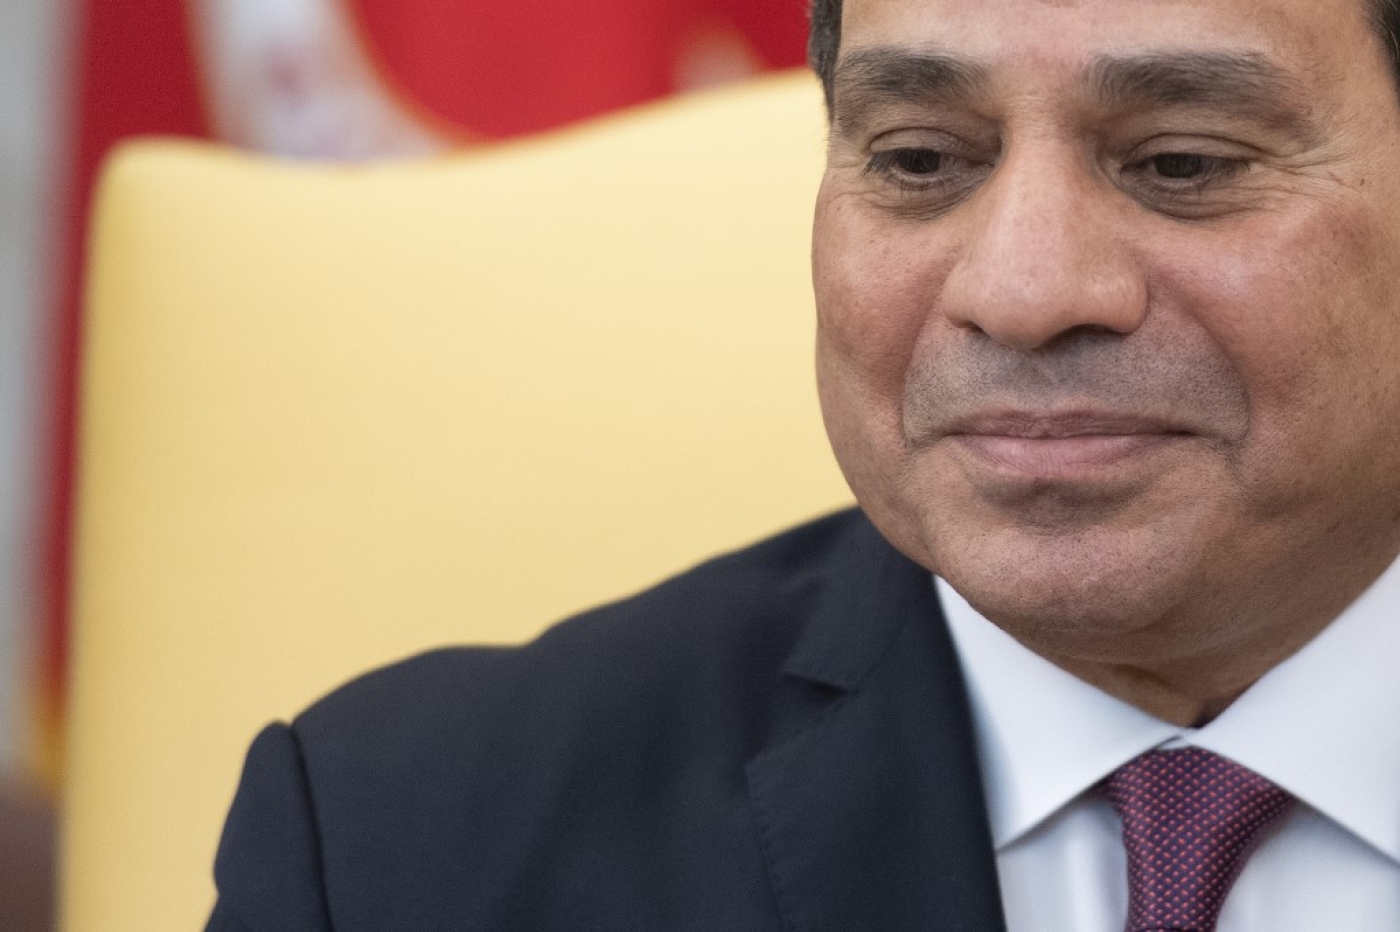 En Egypte, rencontrer des ambassadeurs étrangers mène en prison